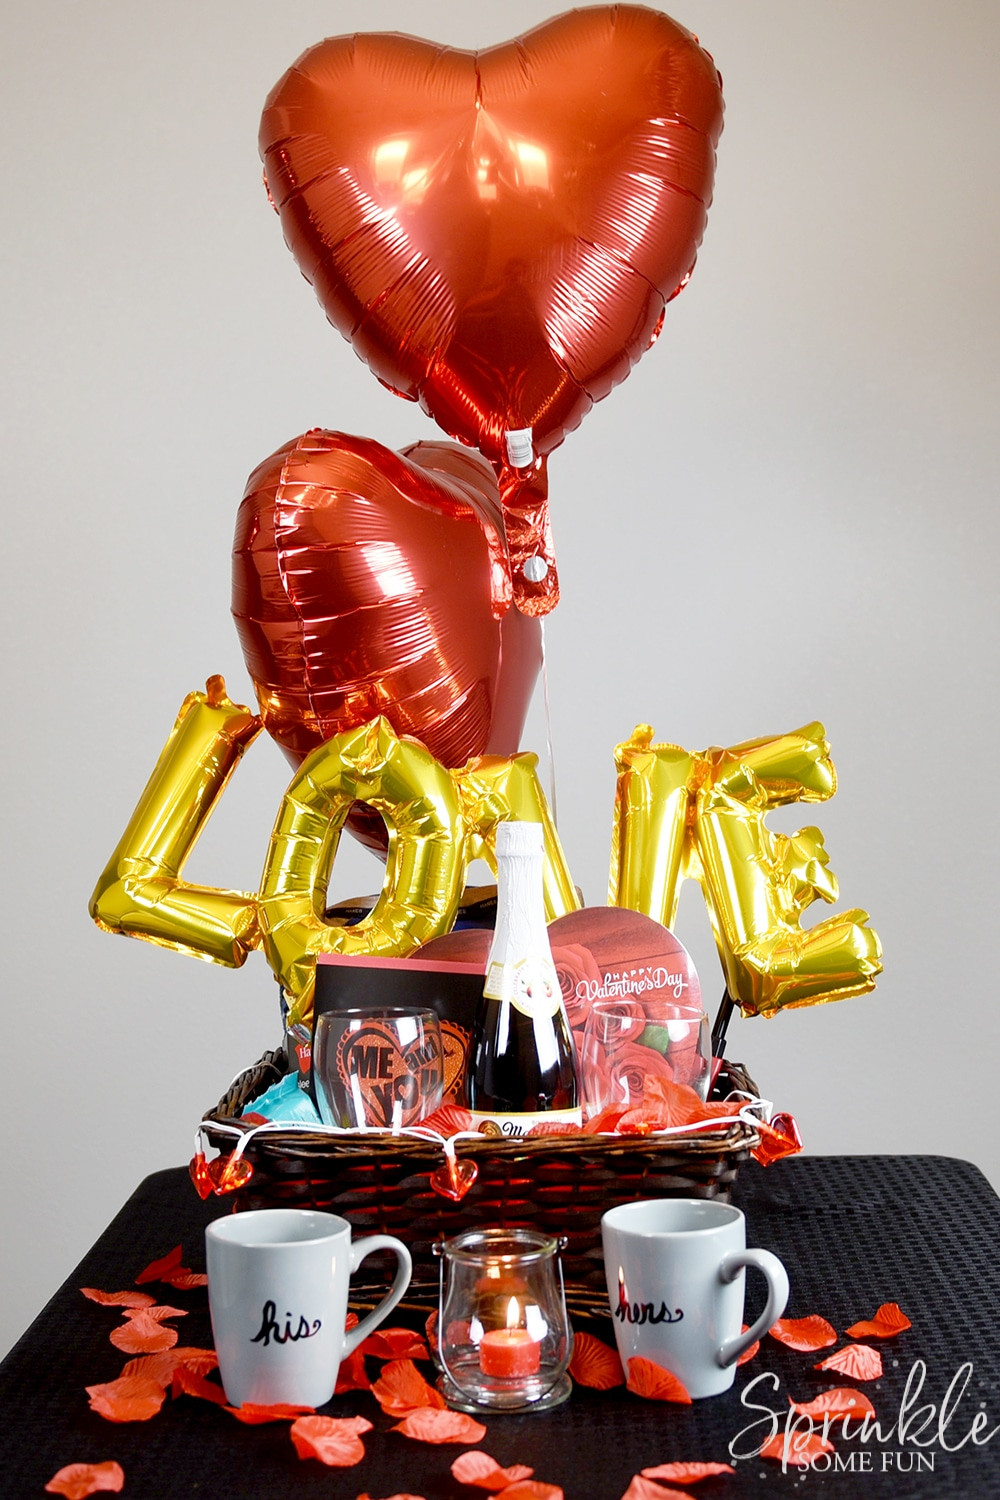 Romantic Valentine Gift Ideas
 Romantic Valentine Gift Basket Ideas ⋆ Sprinkle Some Fun